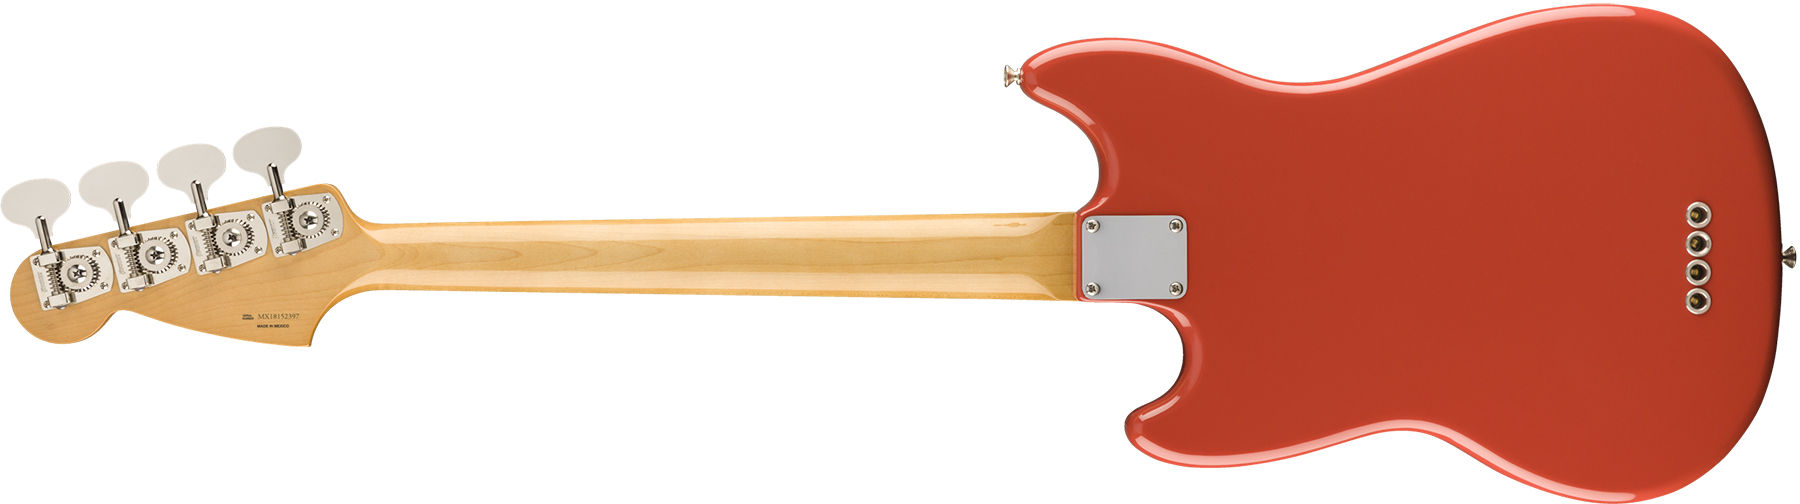 Fender Mustang Bass 60s Vintera Vintage Mex Pf - Fiesta Red - Bajo eléctrico para niños - Variation 1